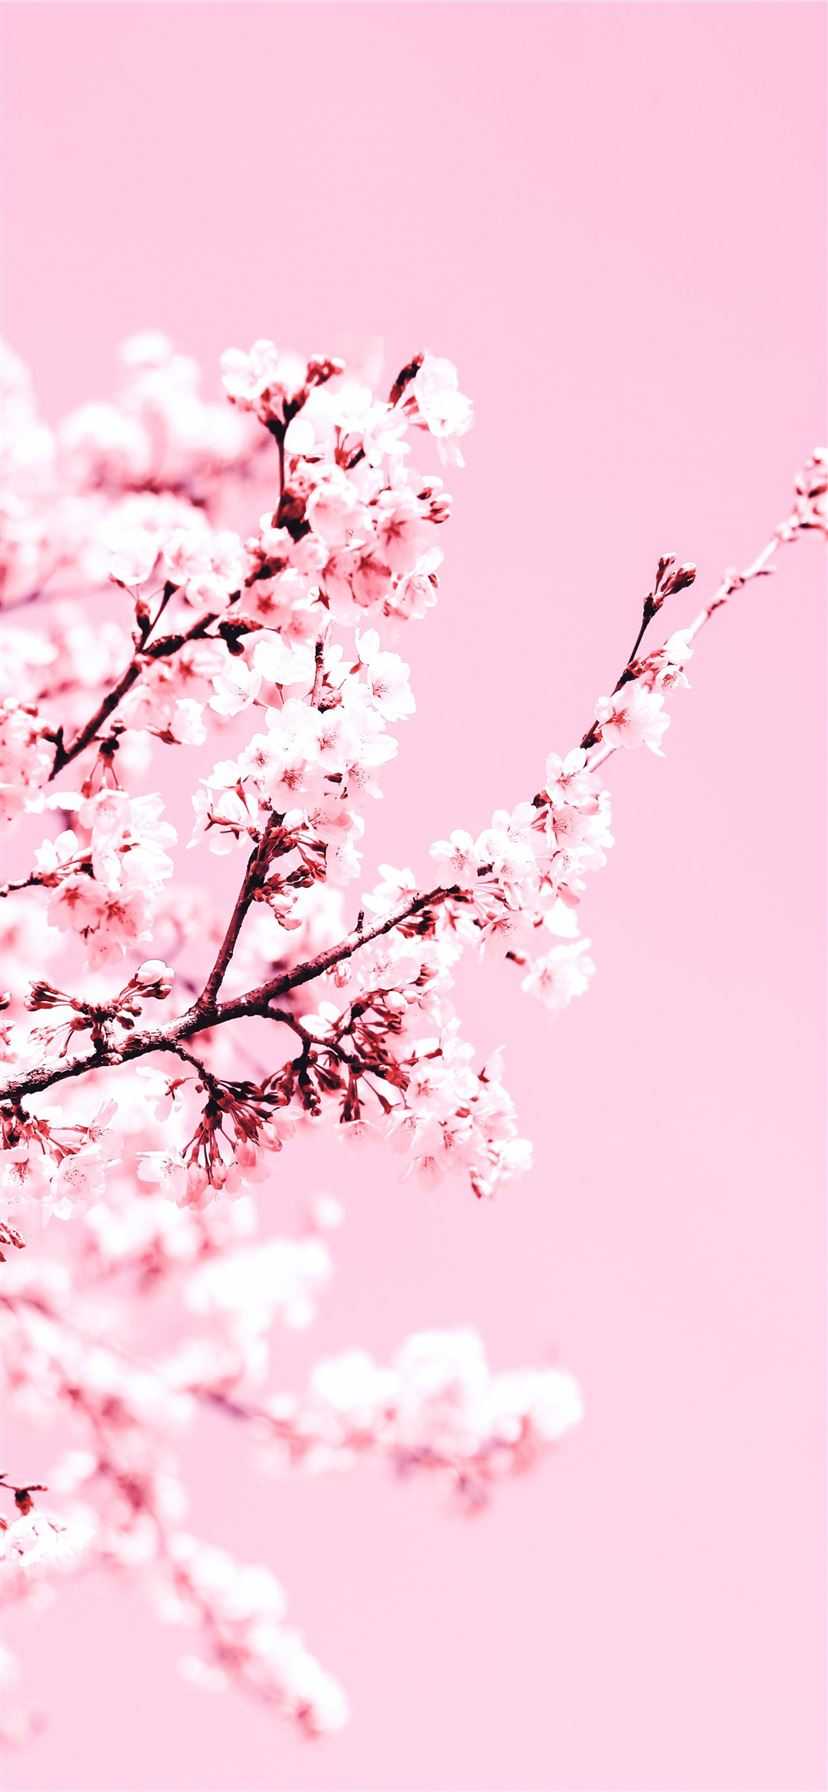 Wallpaper ID 413151  Earth Sakura Phone Wallpaper Cherry Blossom Sakura  Blossom Spring 1080x1920 free download